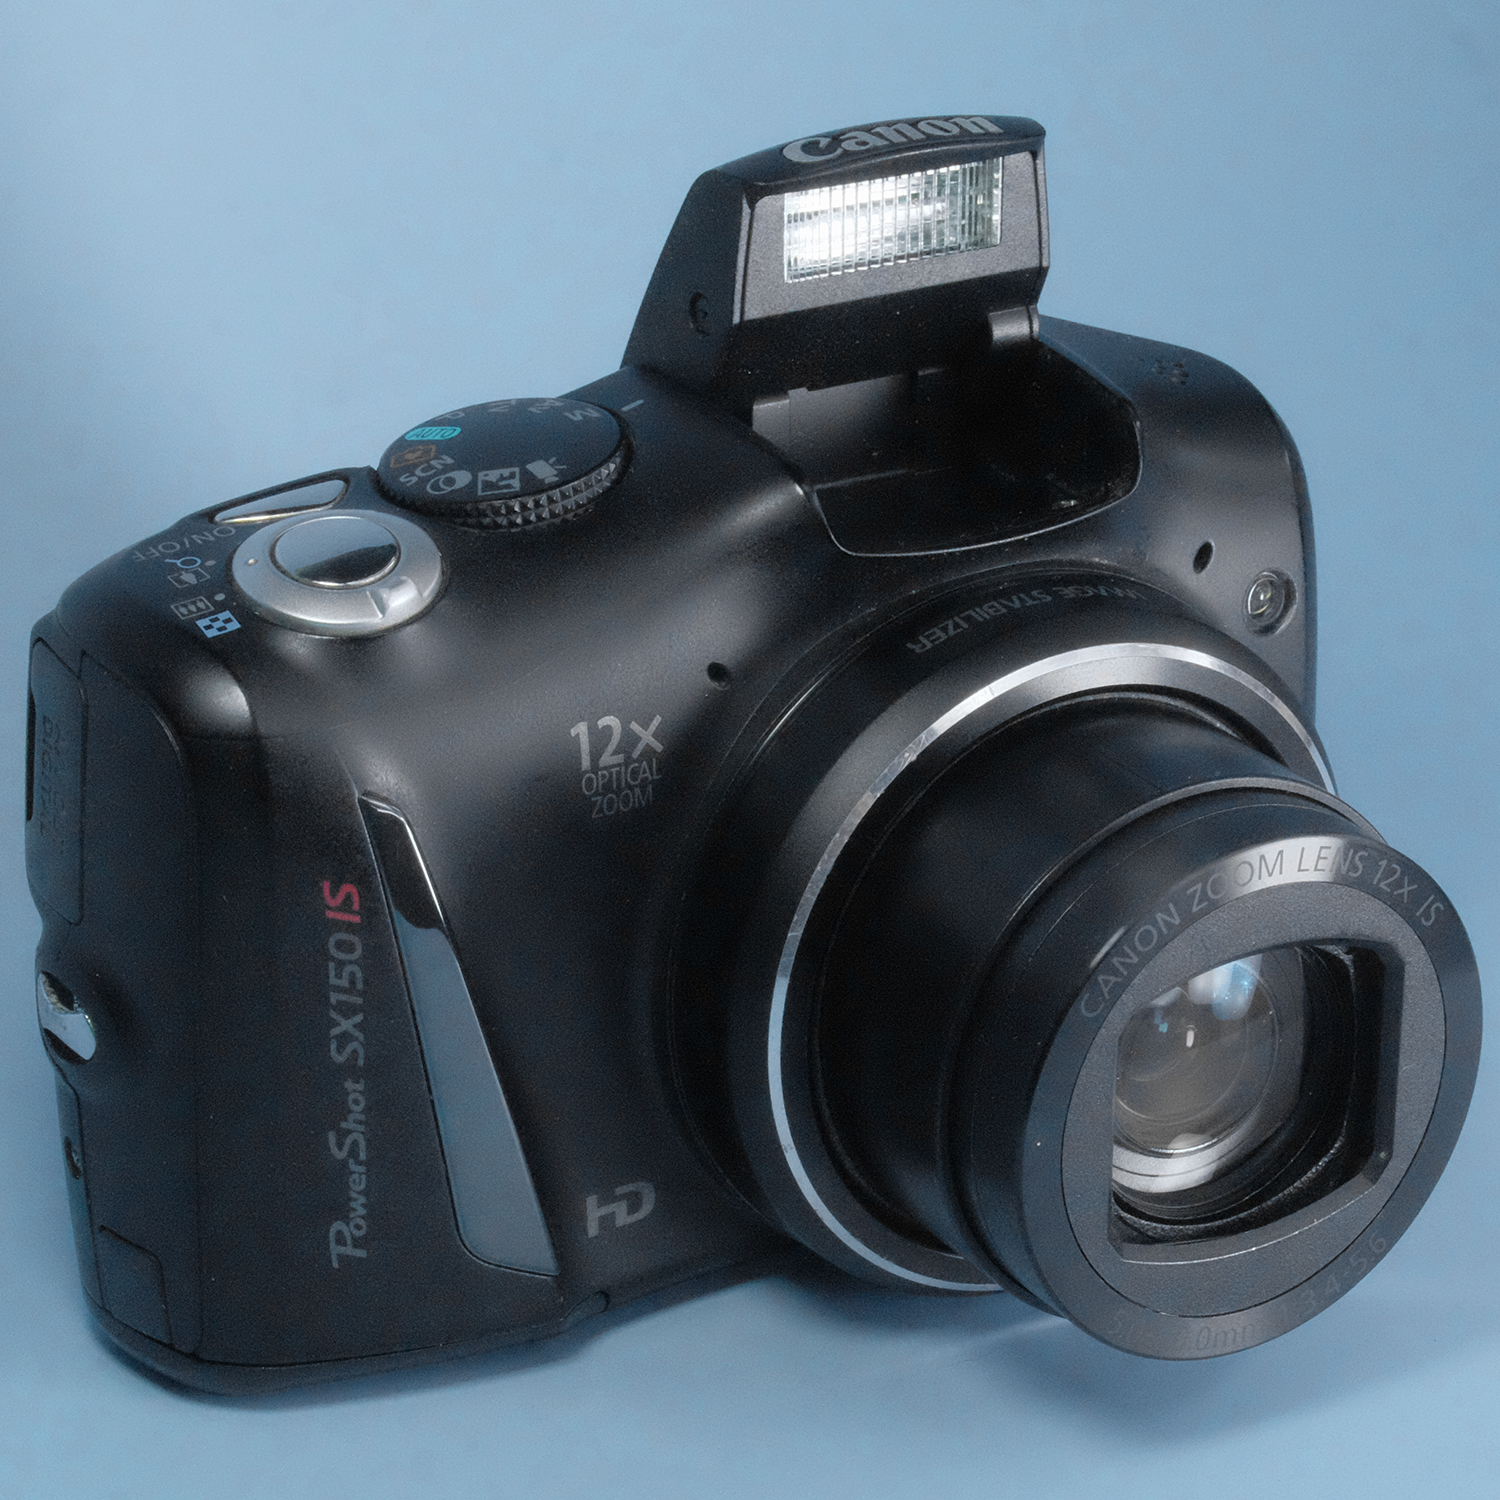 Canon Powershot SX150 IS (2011 Bridge Camera)